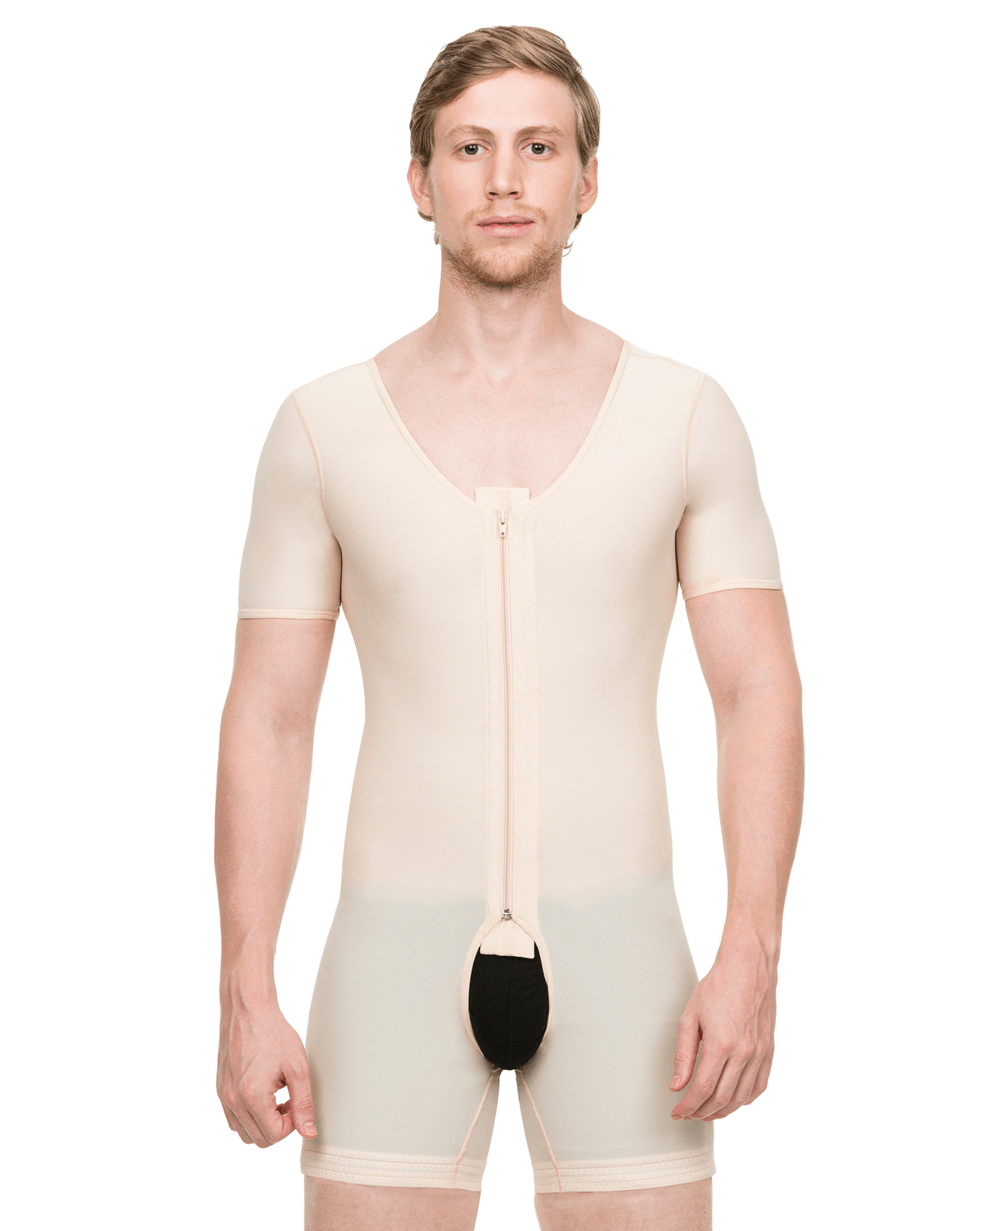 Male Mid-Thigh Compression Bodysuit w/Zipper (MG02)